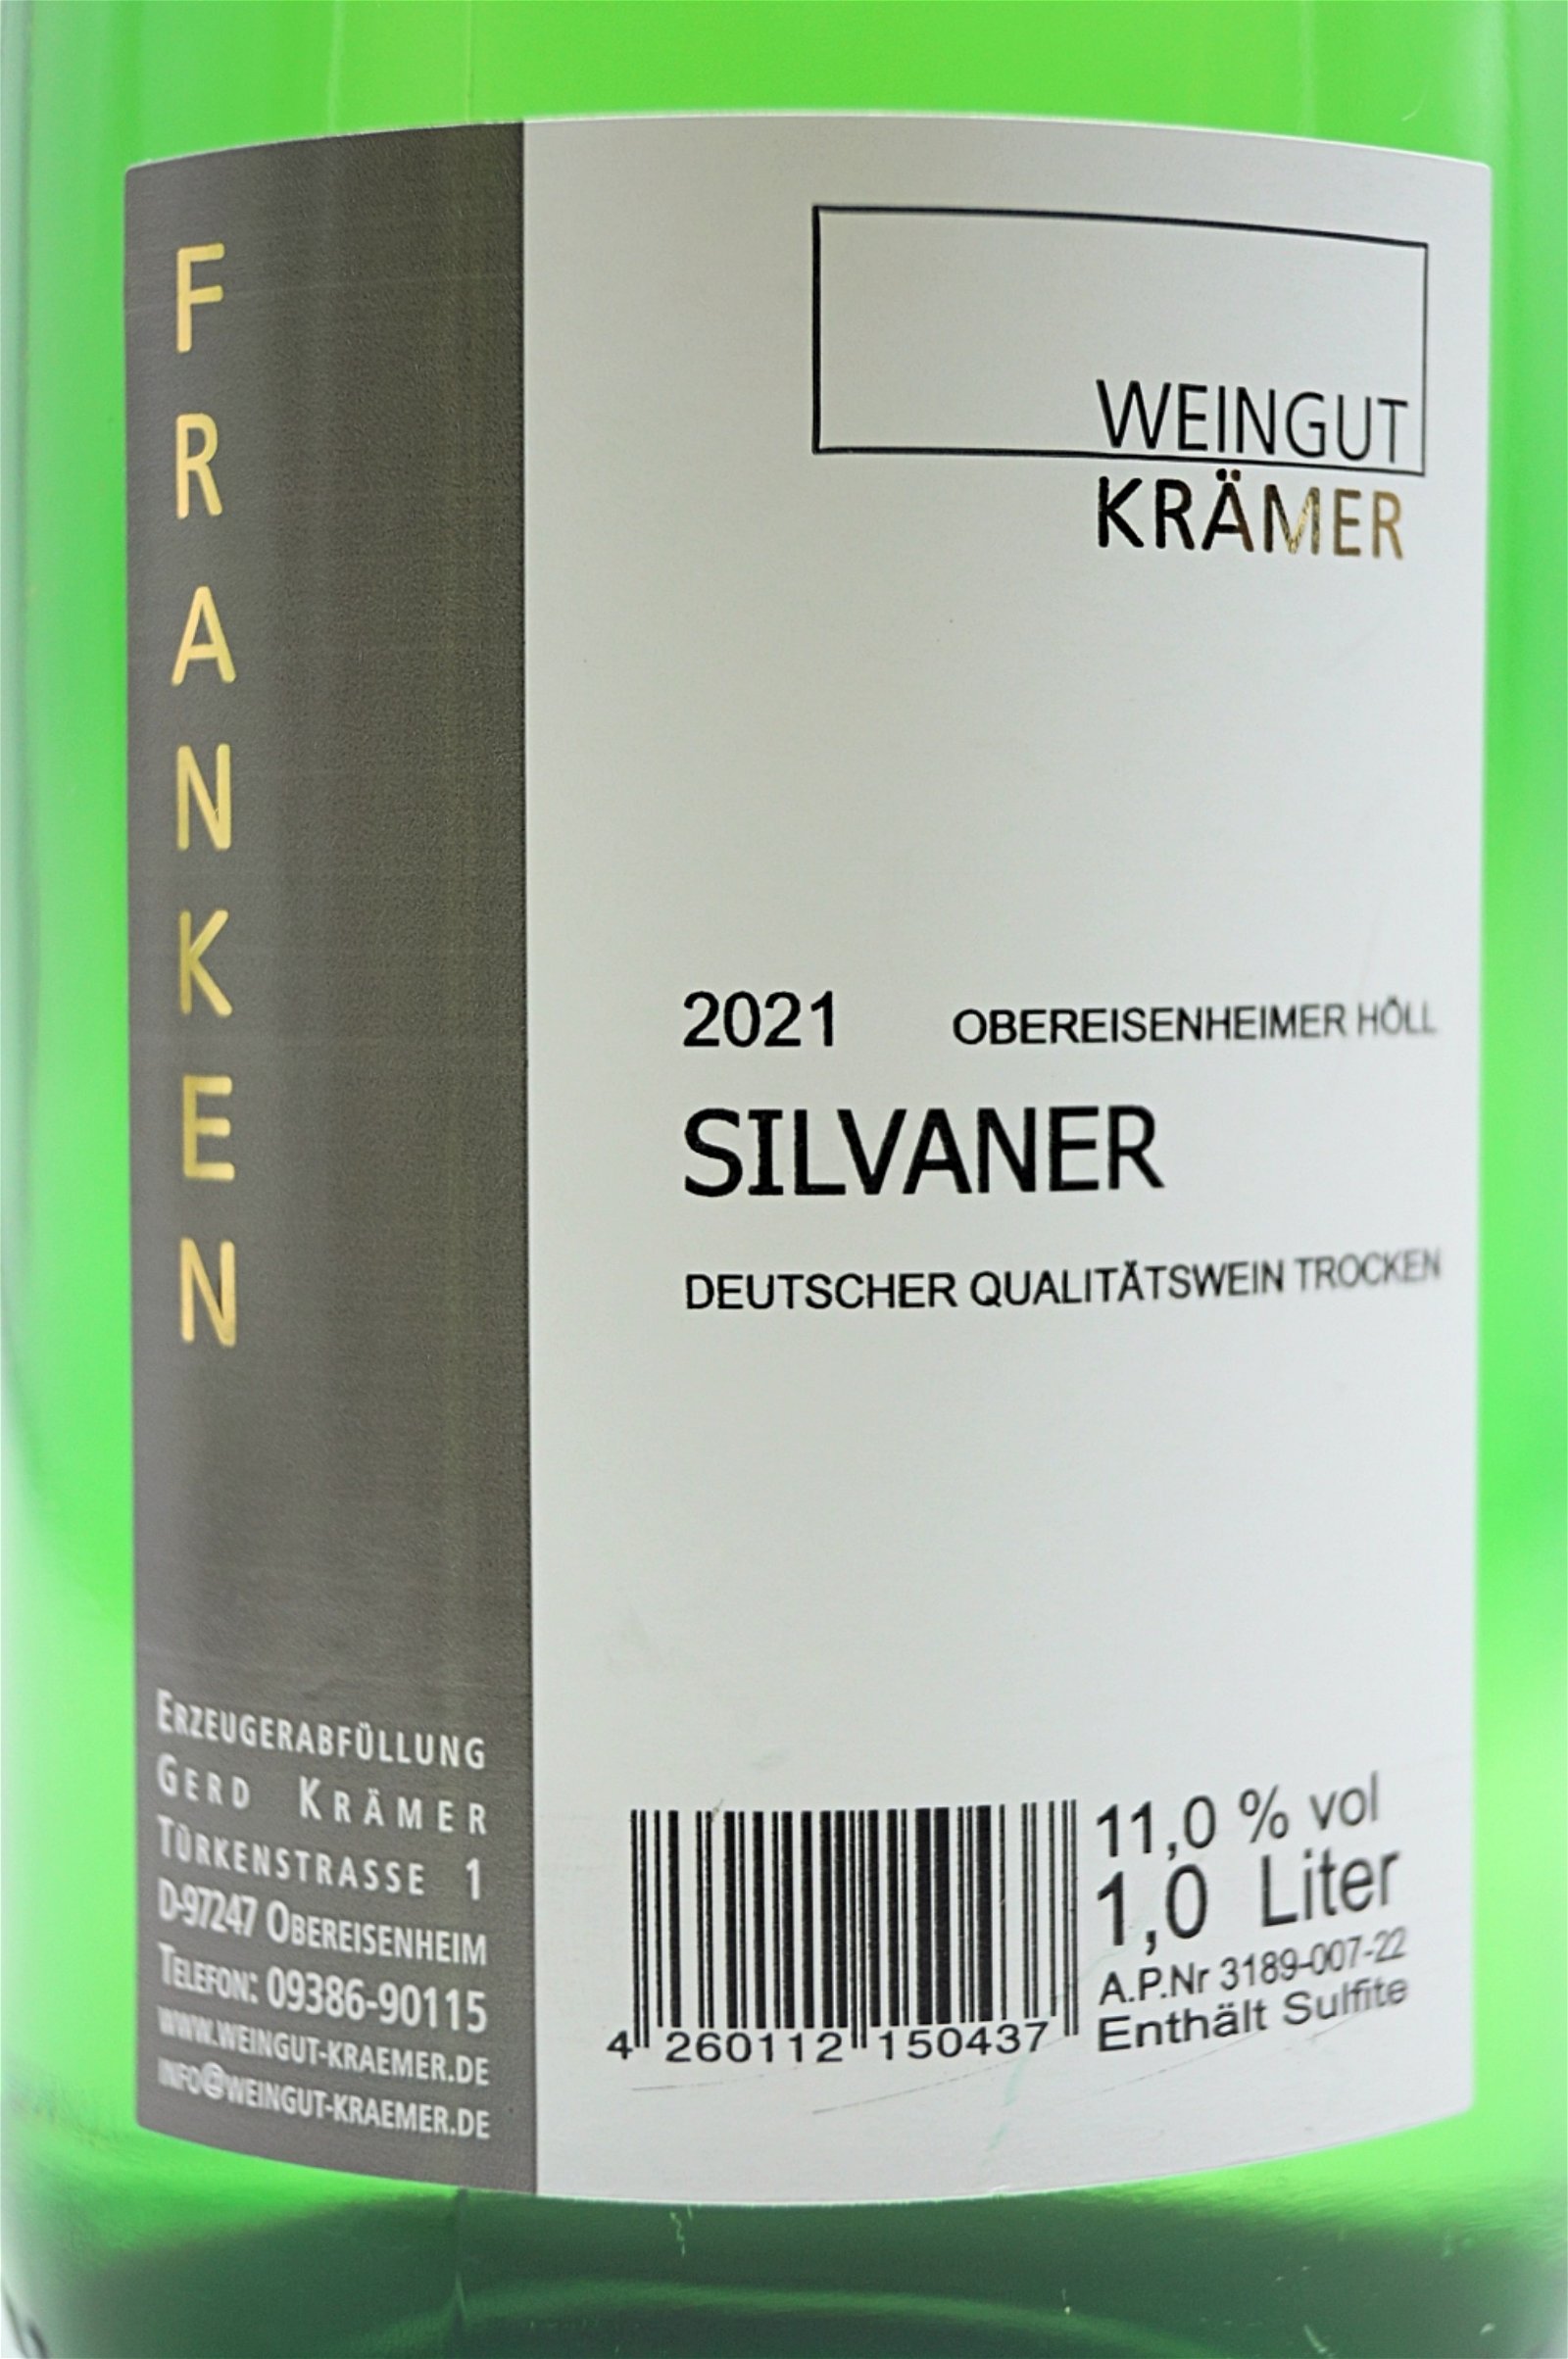 Weingut Krämer SILVANER 2021